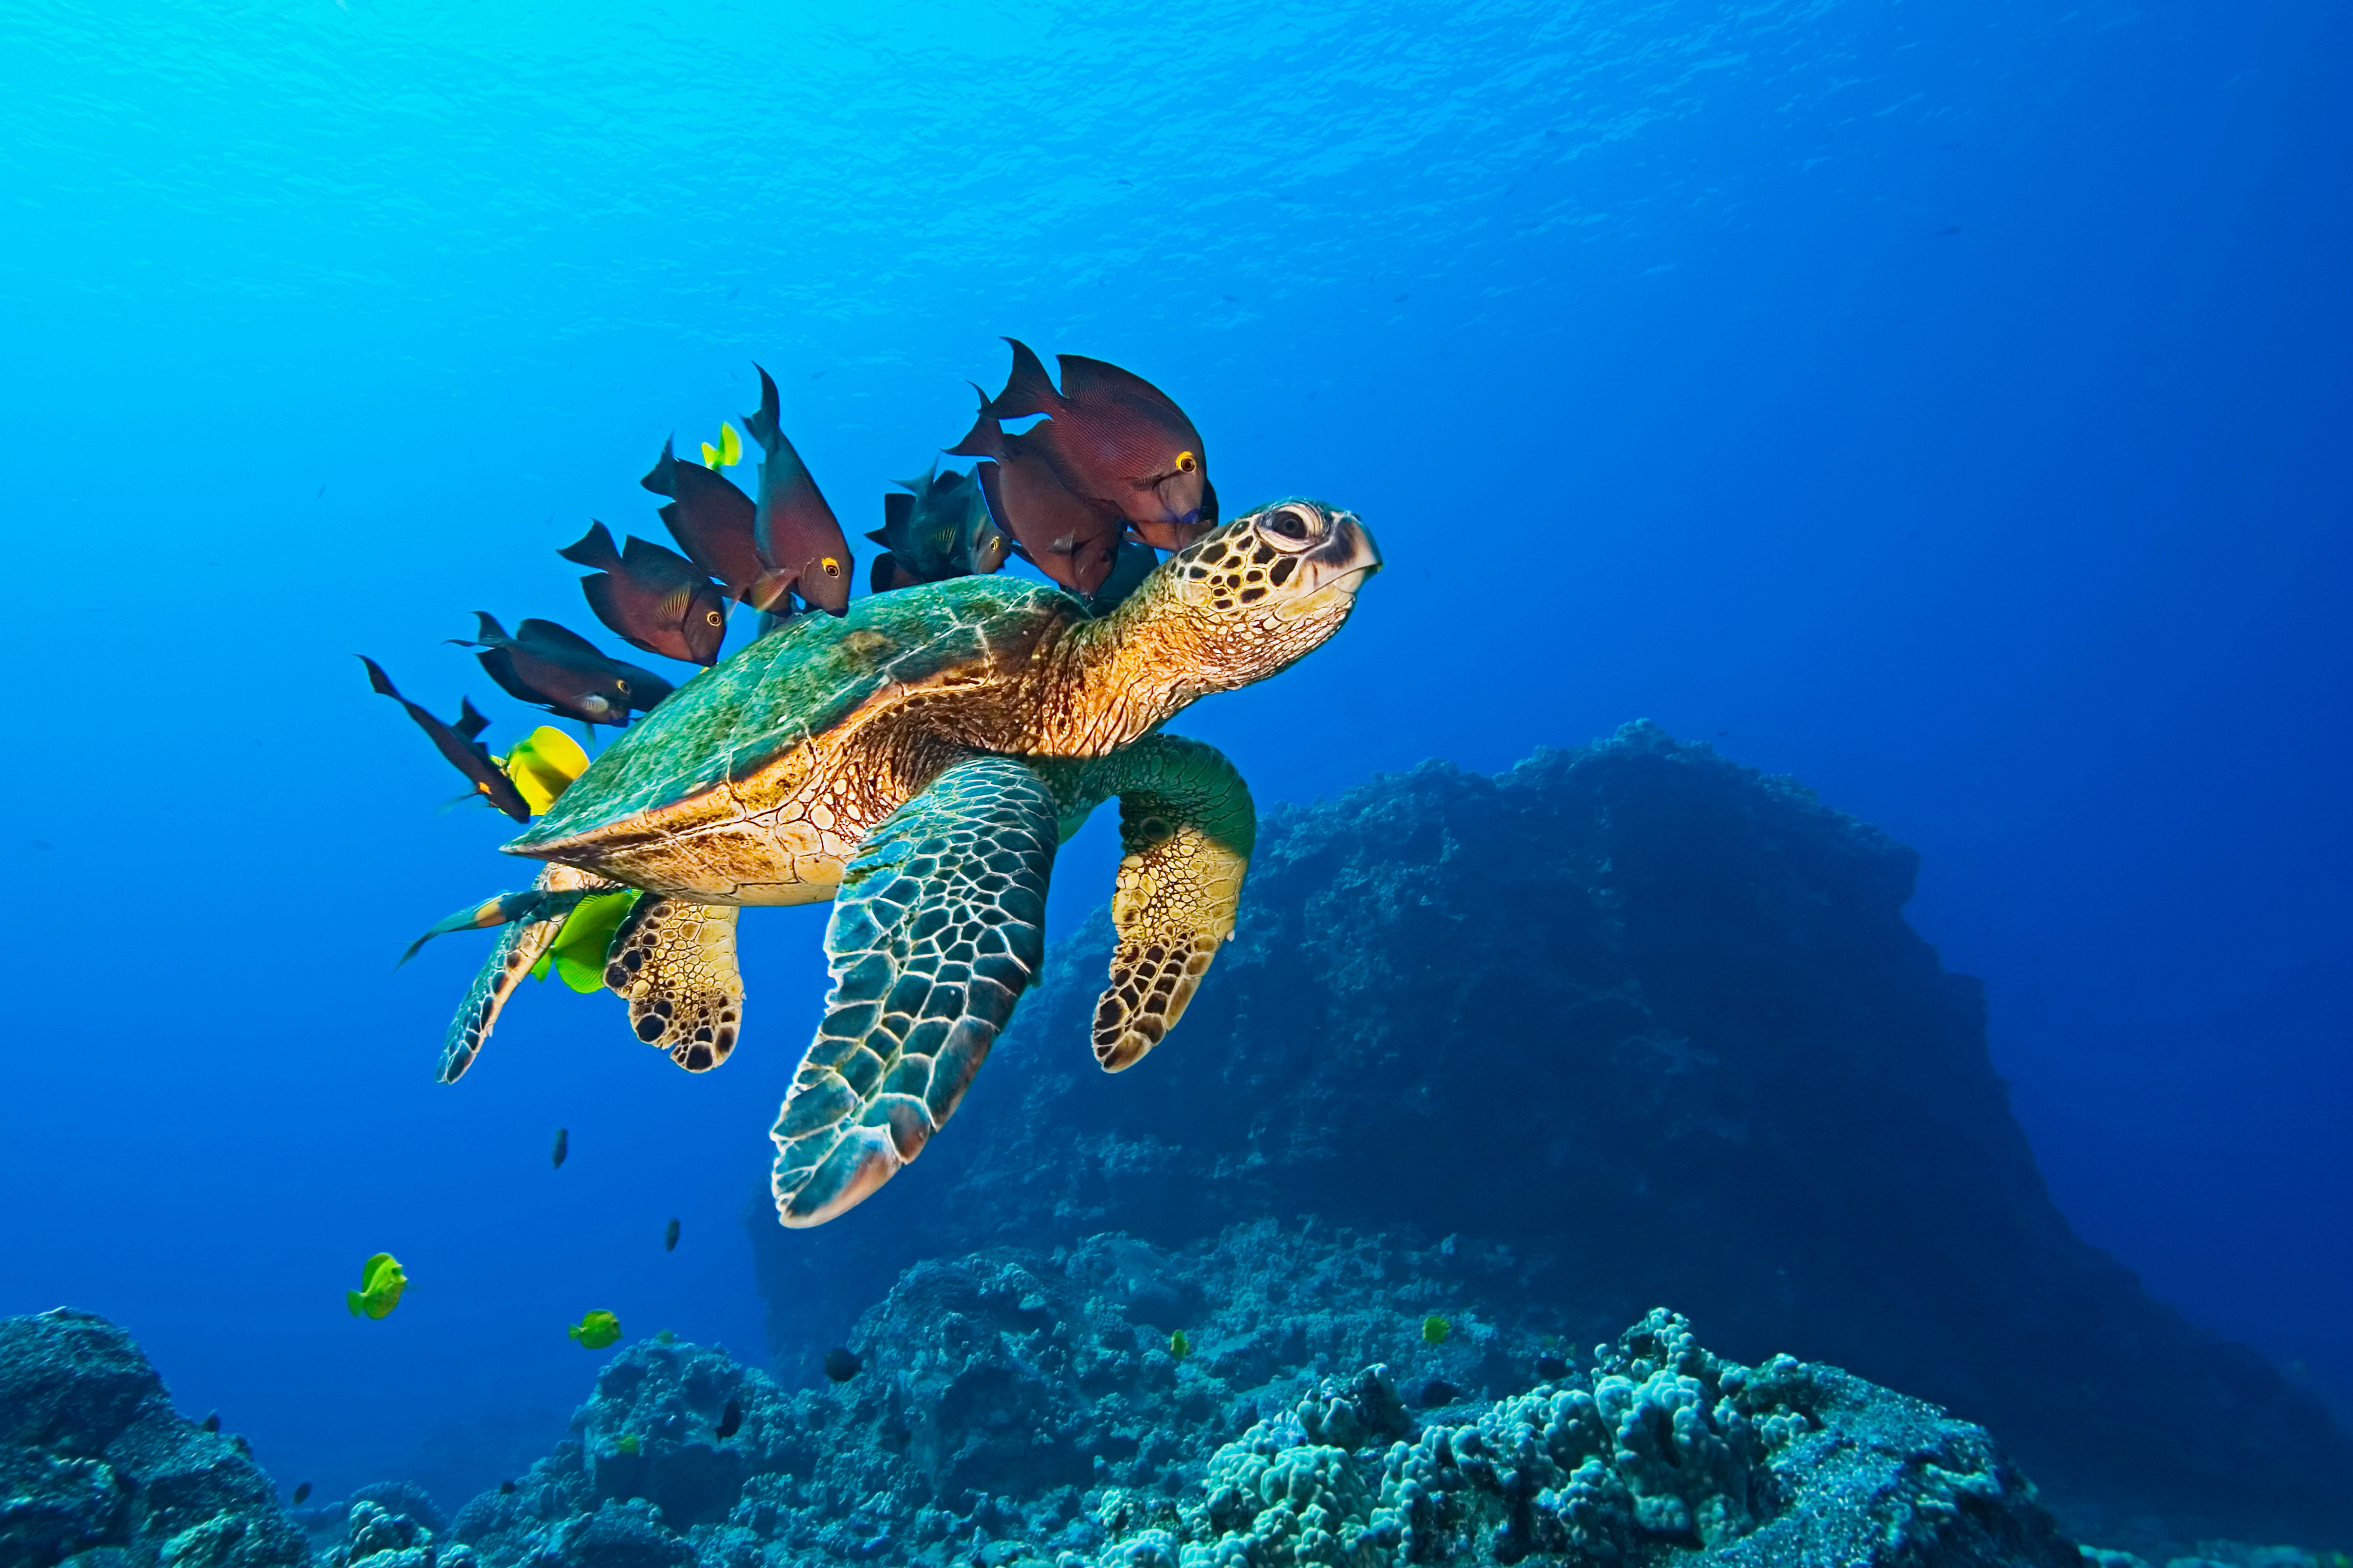 Обитатели моря глубина. Черепаший риф. Морские черепахи Тихого океана. Морская черепаха индийского океана. Черепаха риф риф.